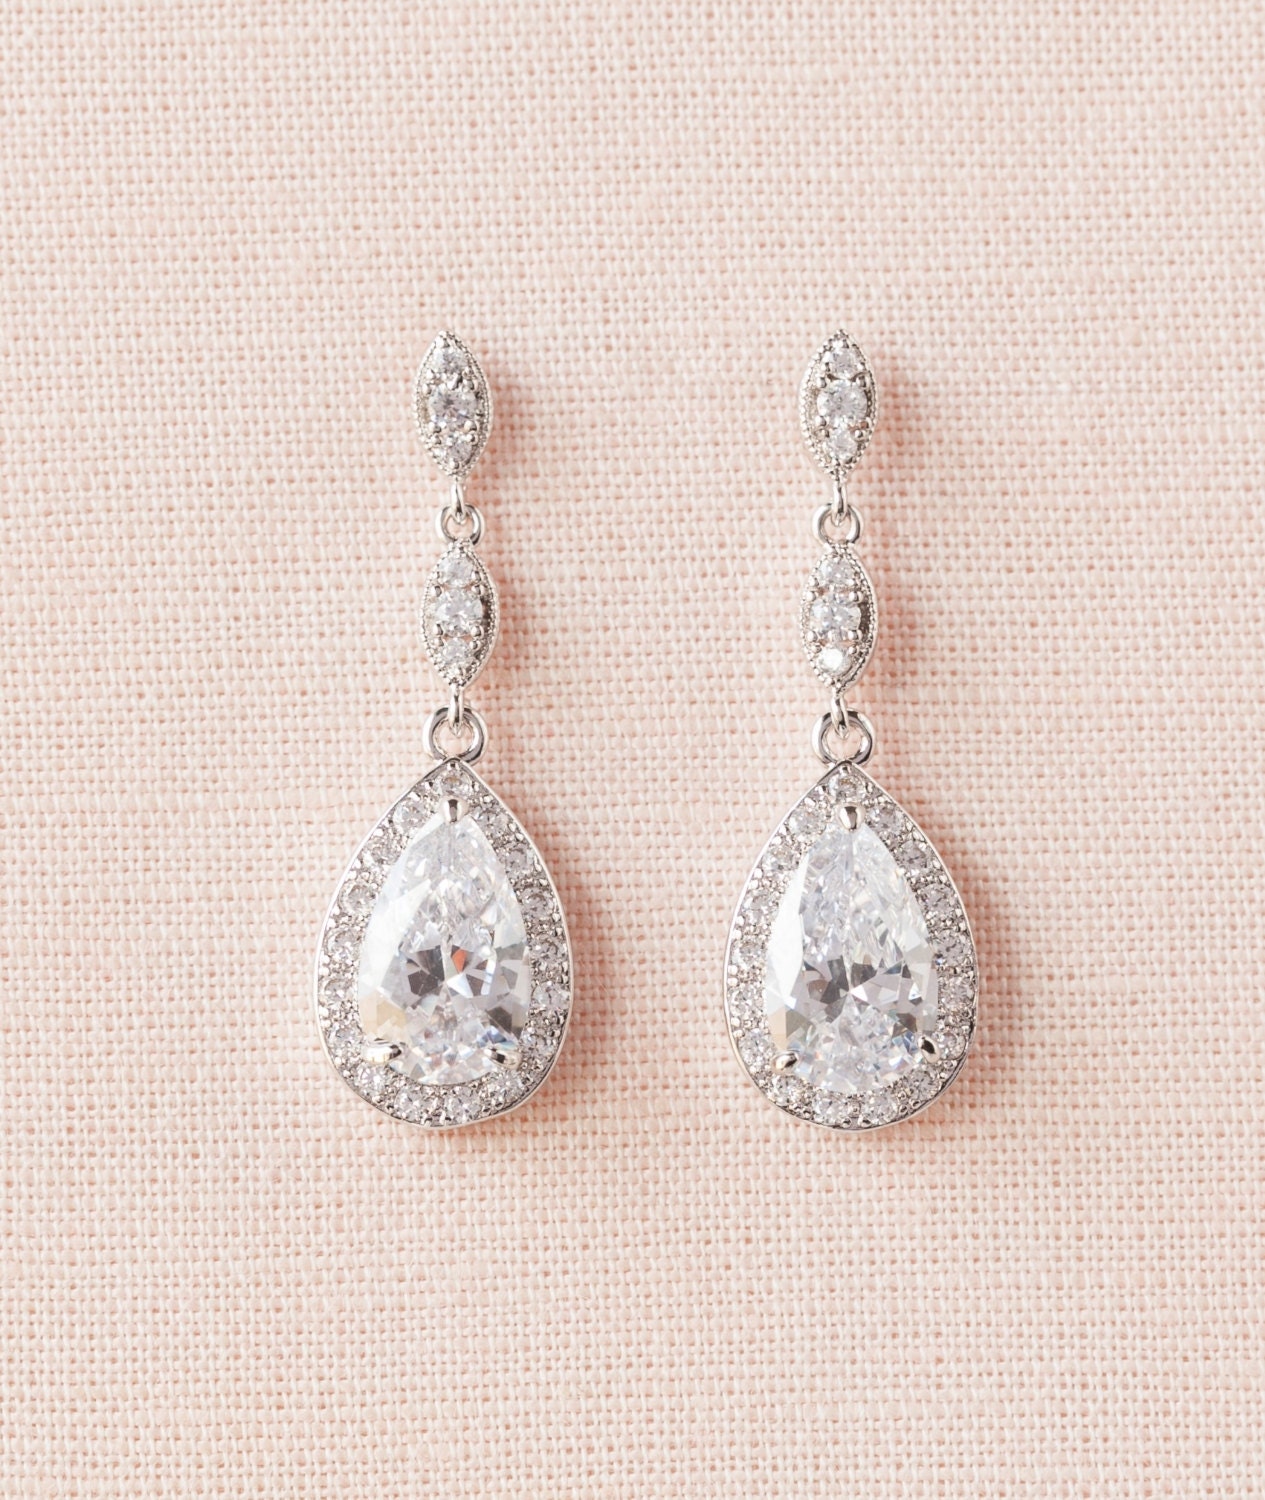 Bridal Earrings Crystal Wedding earrings Wedding Necklace | Etsy